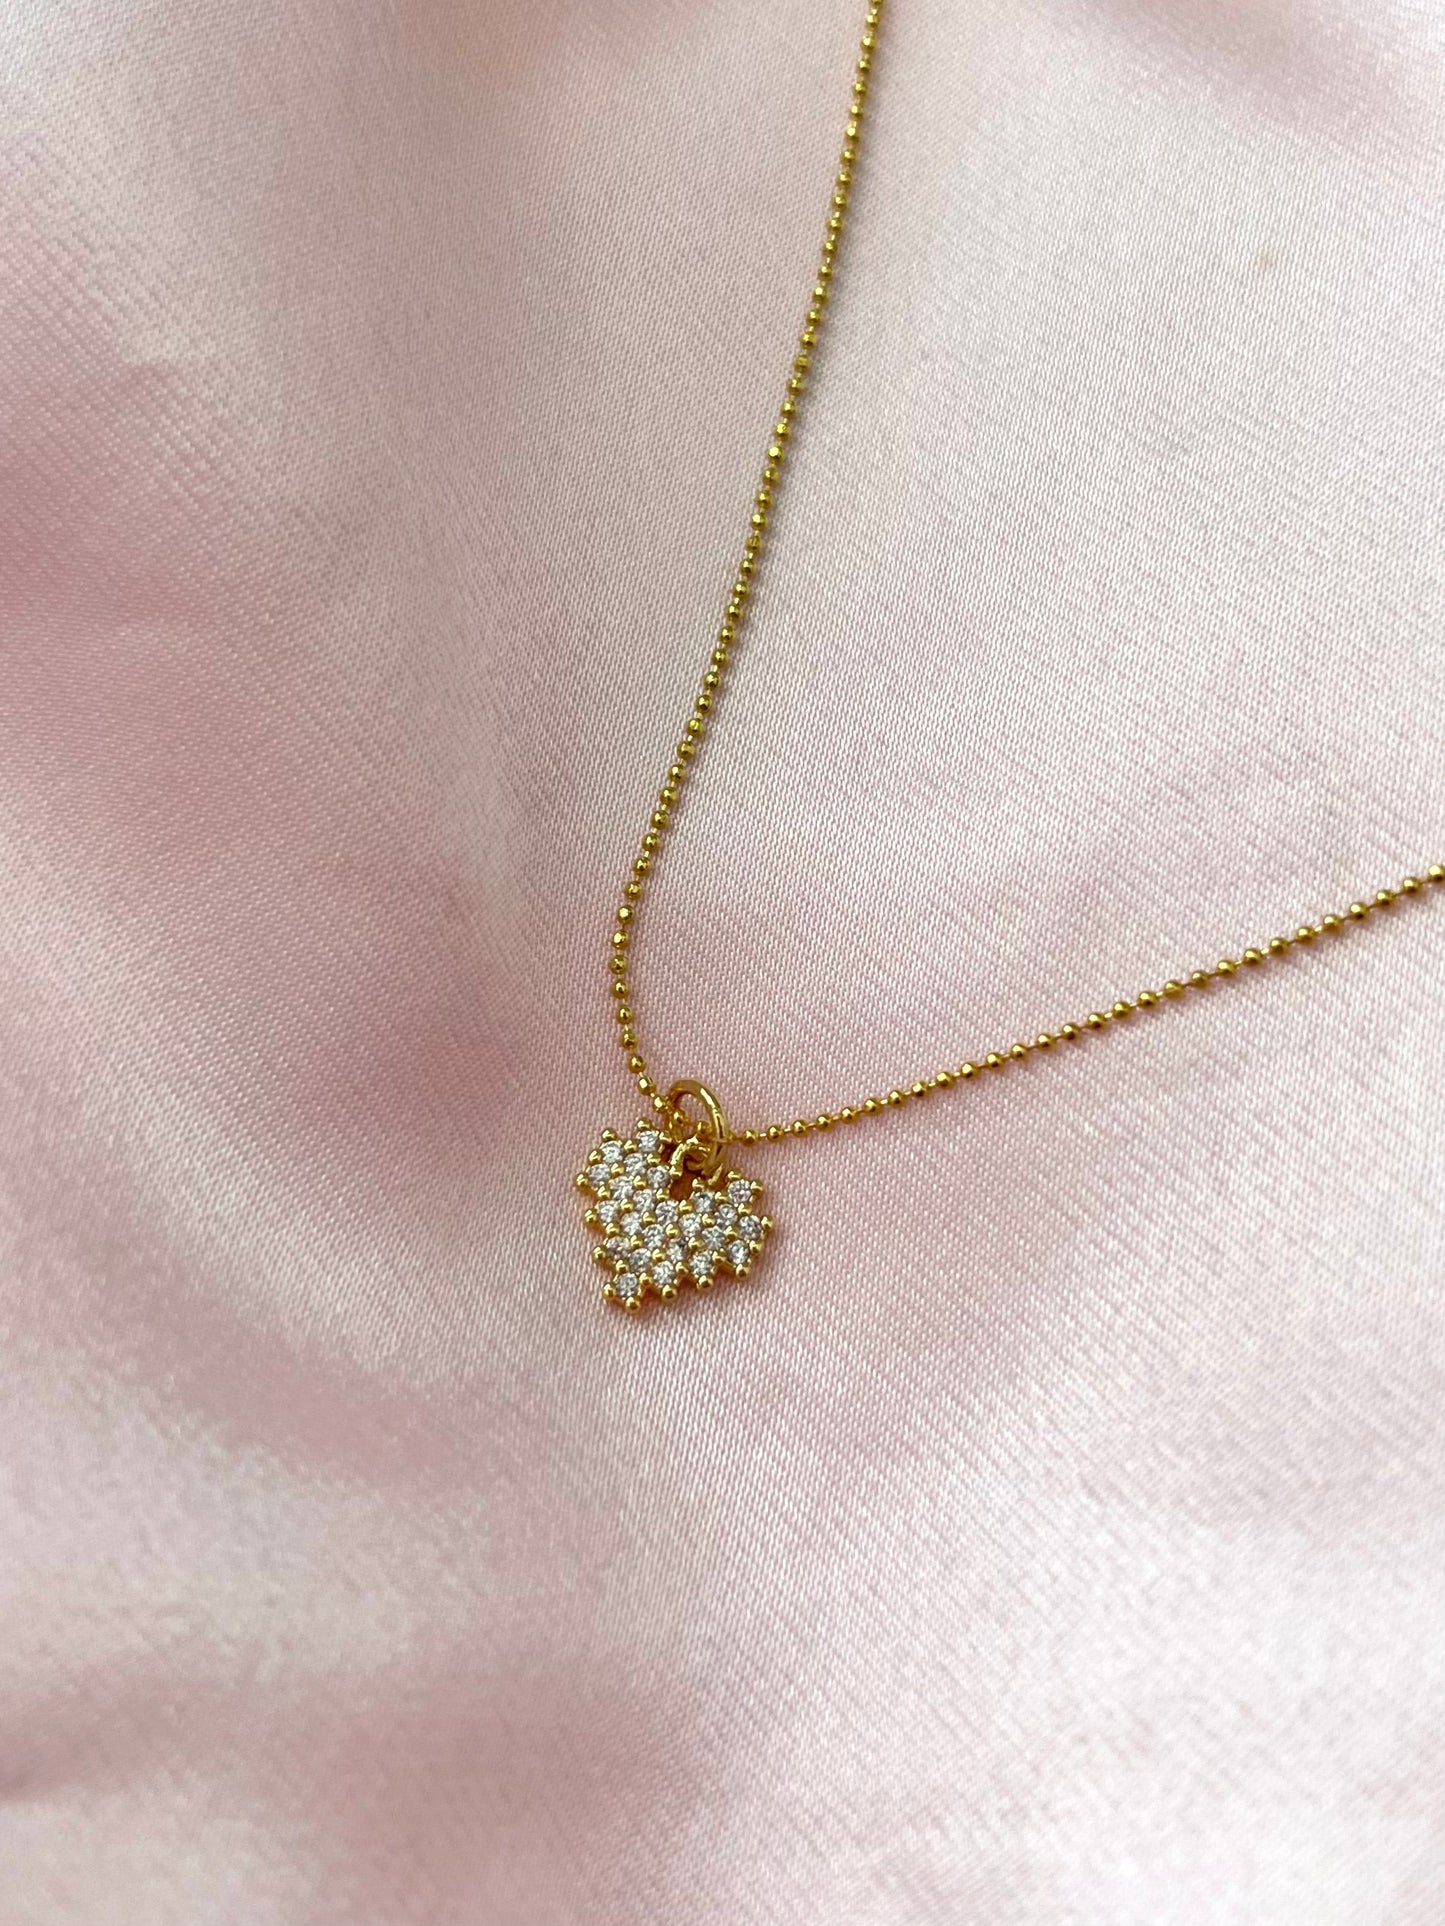 Digi Heart Necklace - Luna Alaska Jewelry